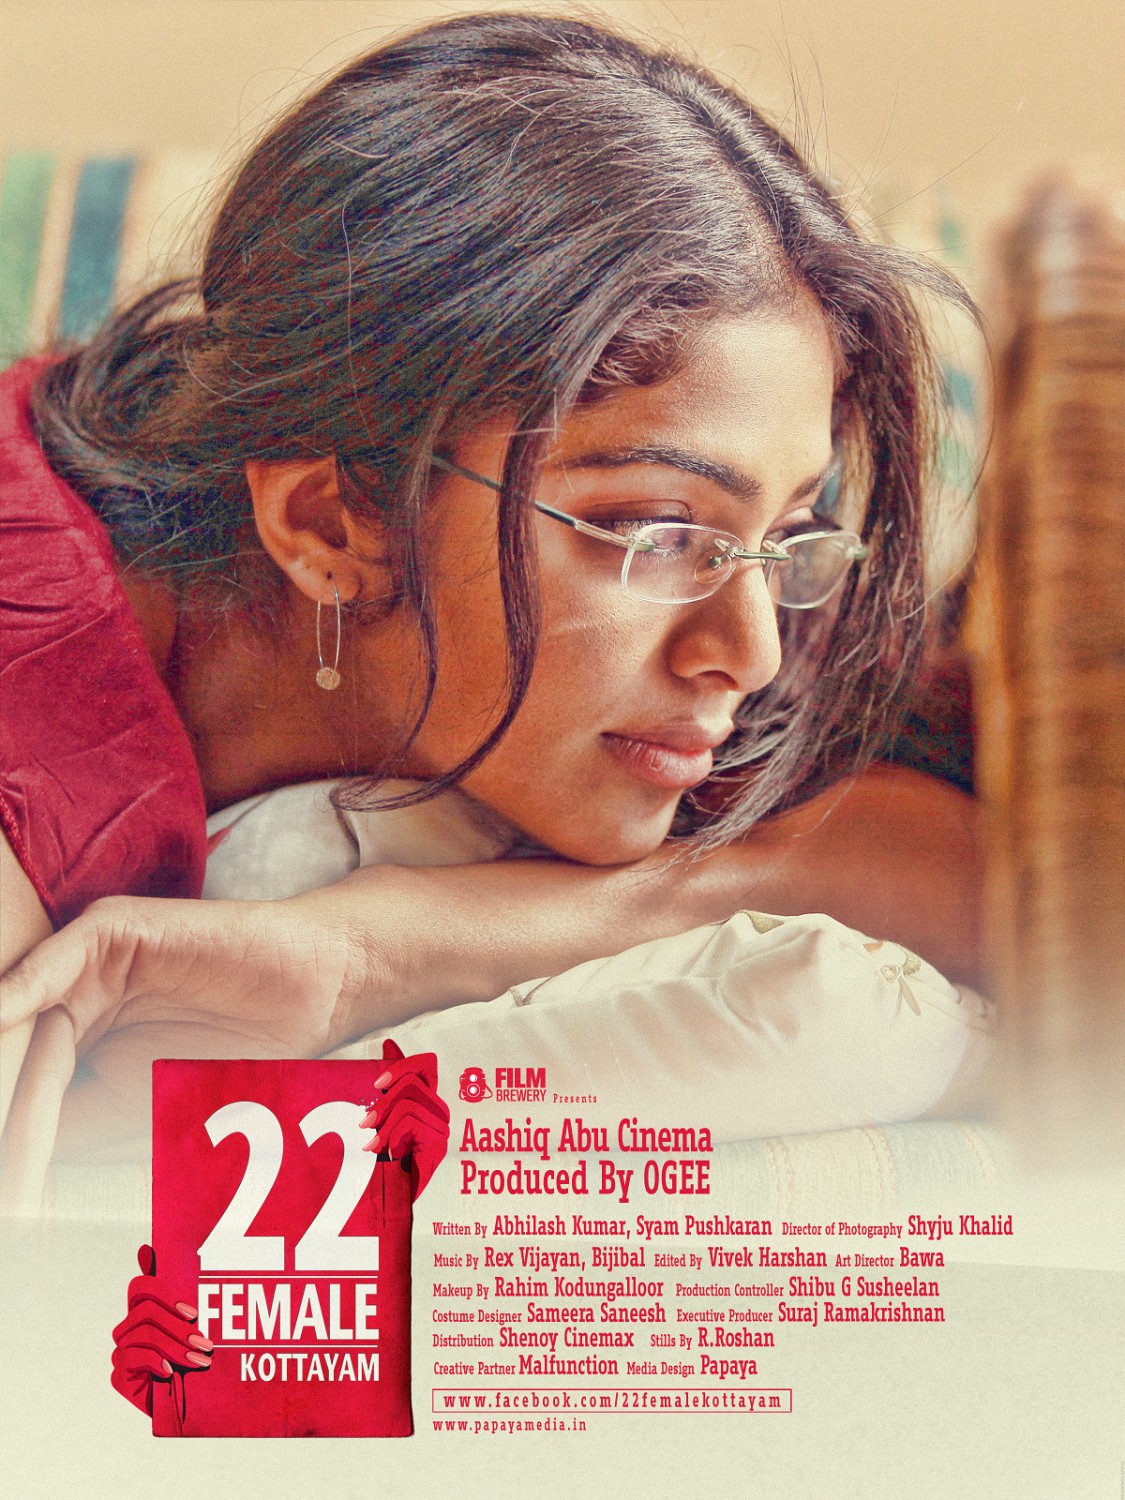 Extra Large Movie Poster Image for 22 Female Kottayam (#26 of 28)